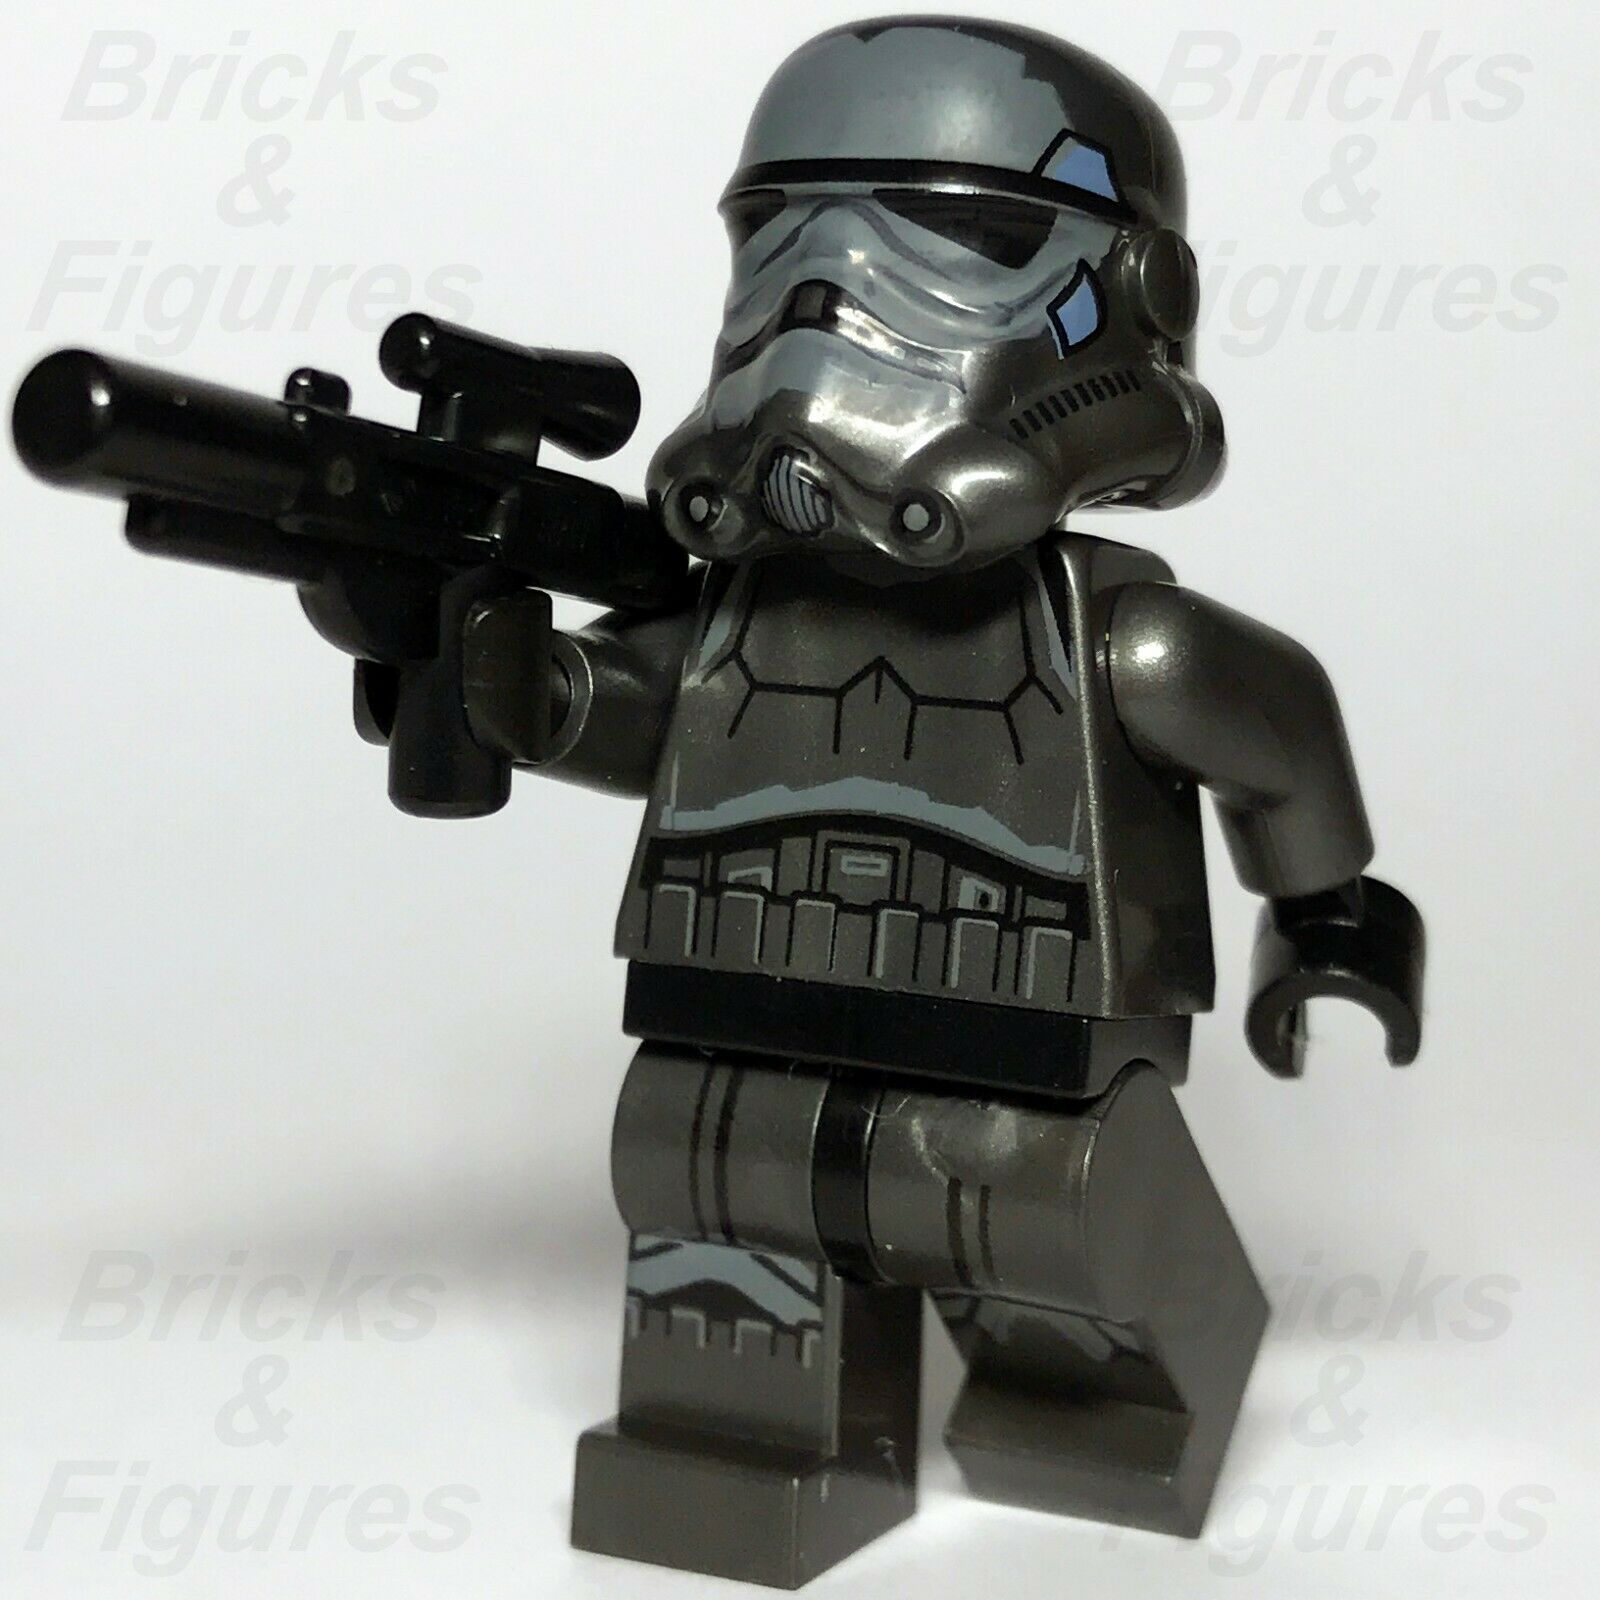 New Star Wars LEGO Imperial Shadow Trooper Stormtrooper Minifigure 75079 - Bricks & Figures